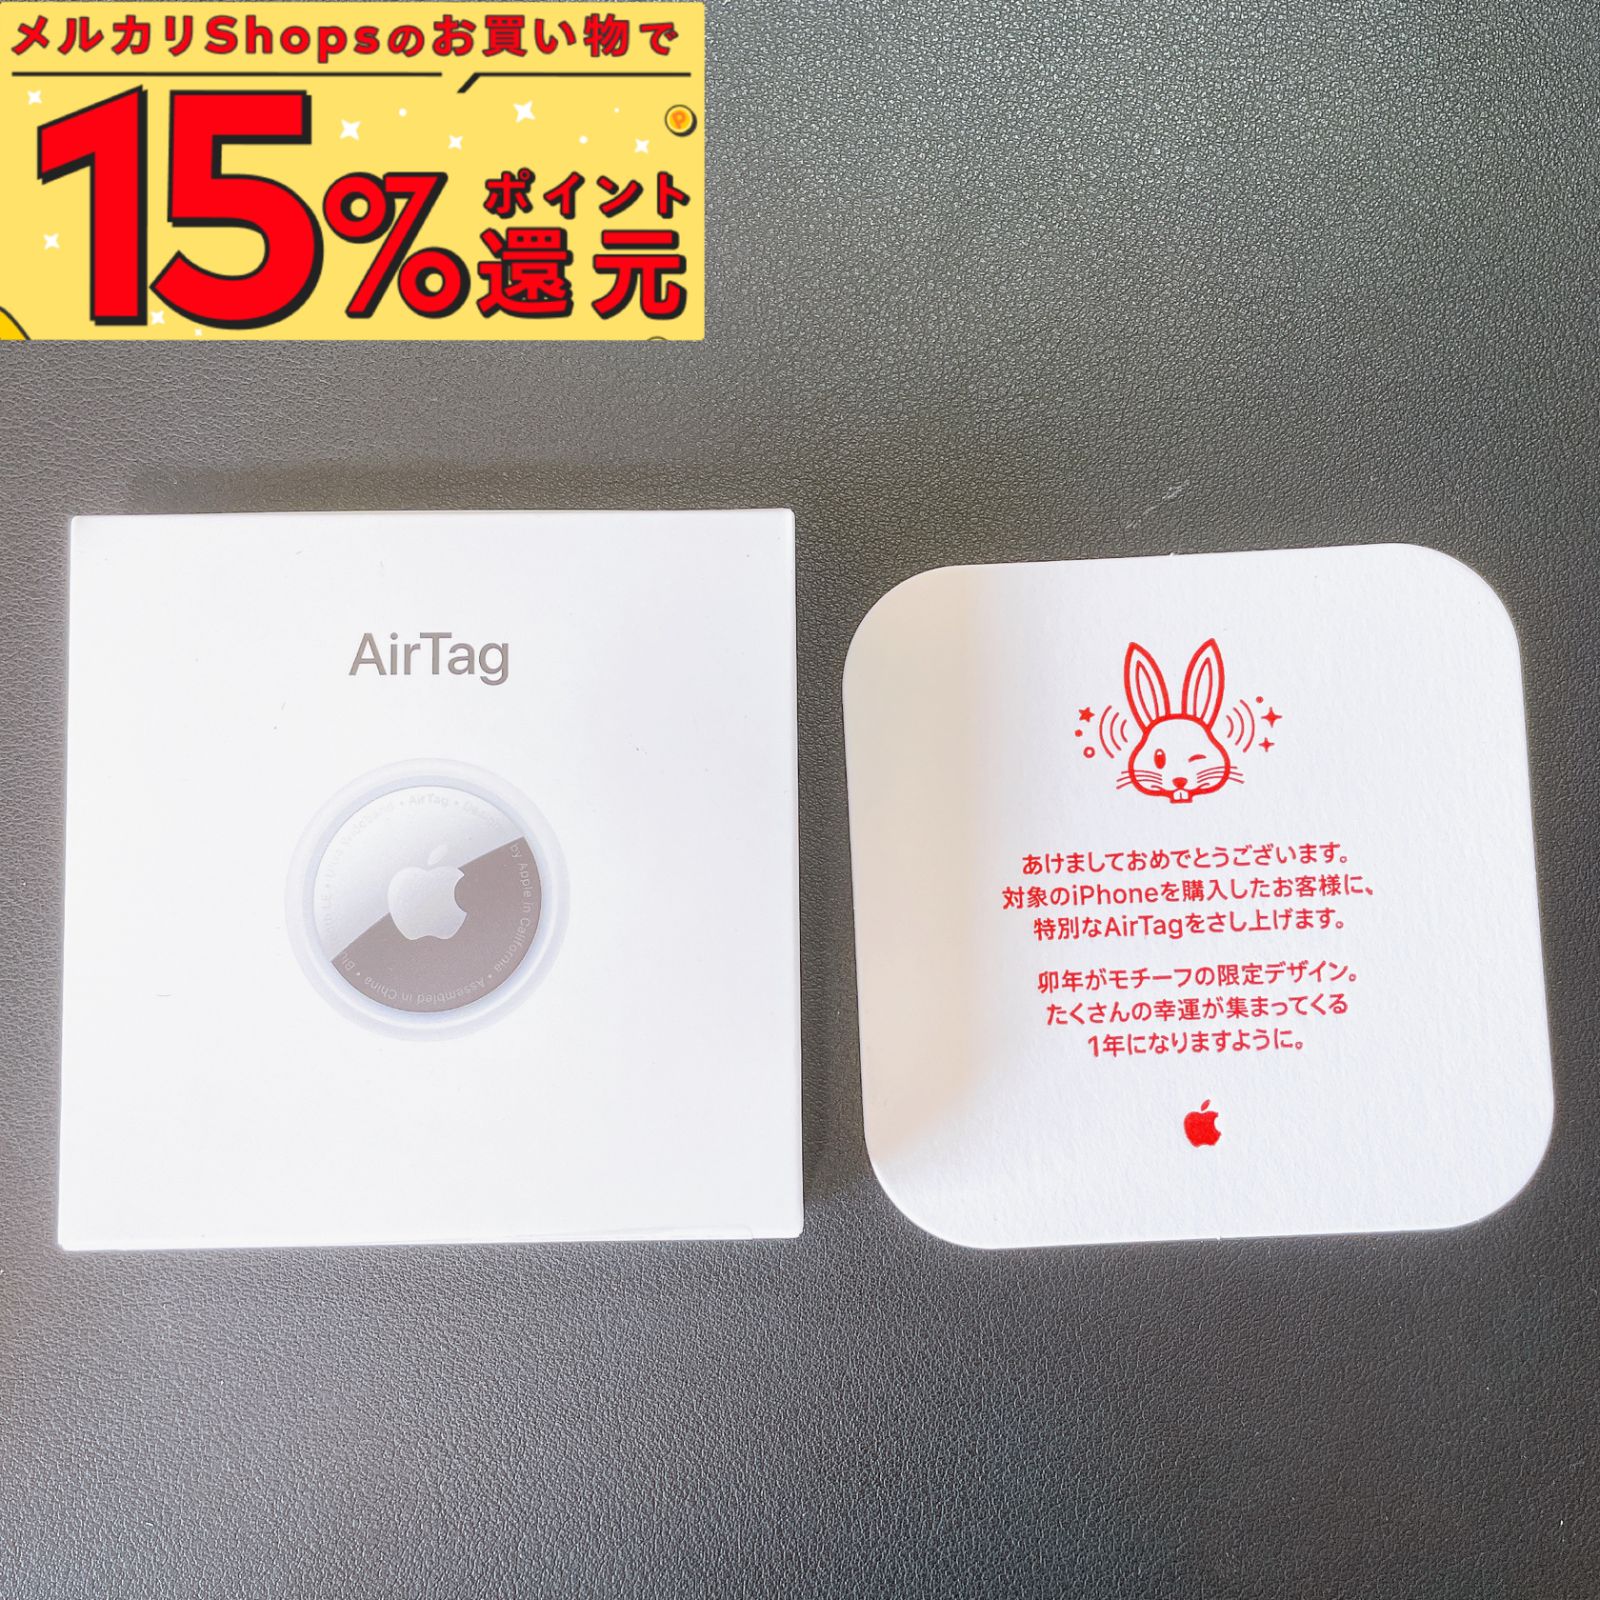 Apple AirTag エアタグ 初売り限定 兎モデル - スマホアクセサリー